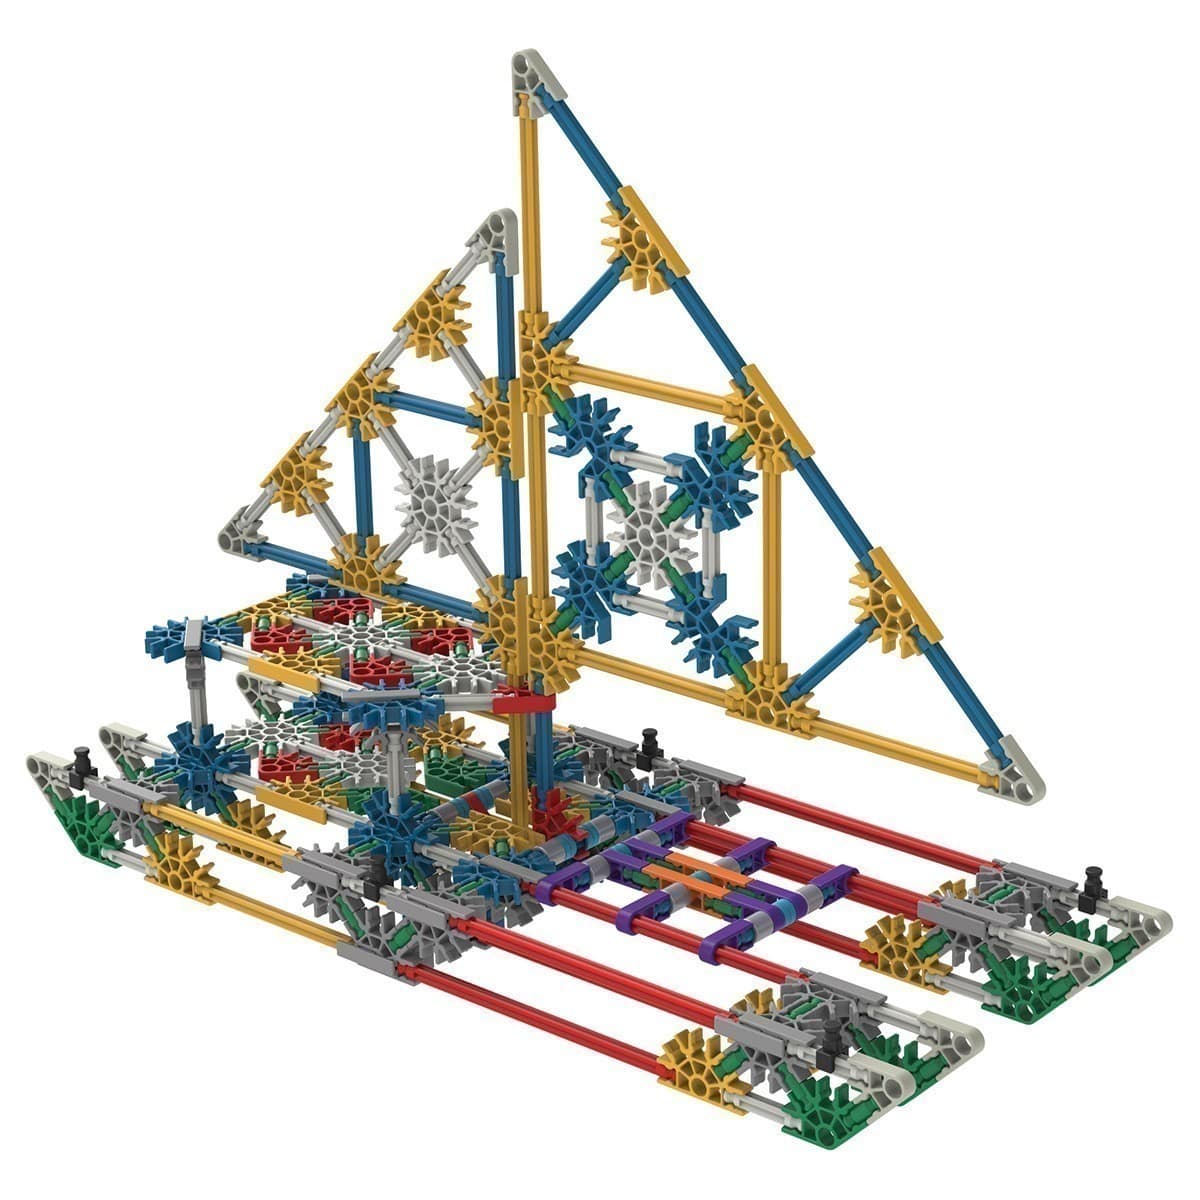 K'Nex - Imagine Classic Constructions - 70 Model Building Set